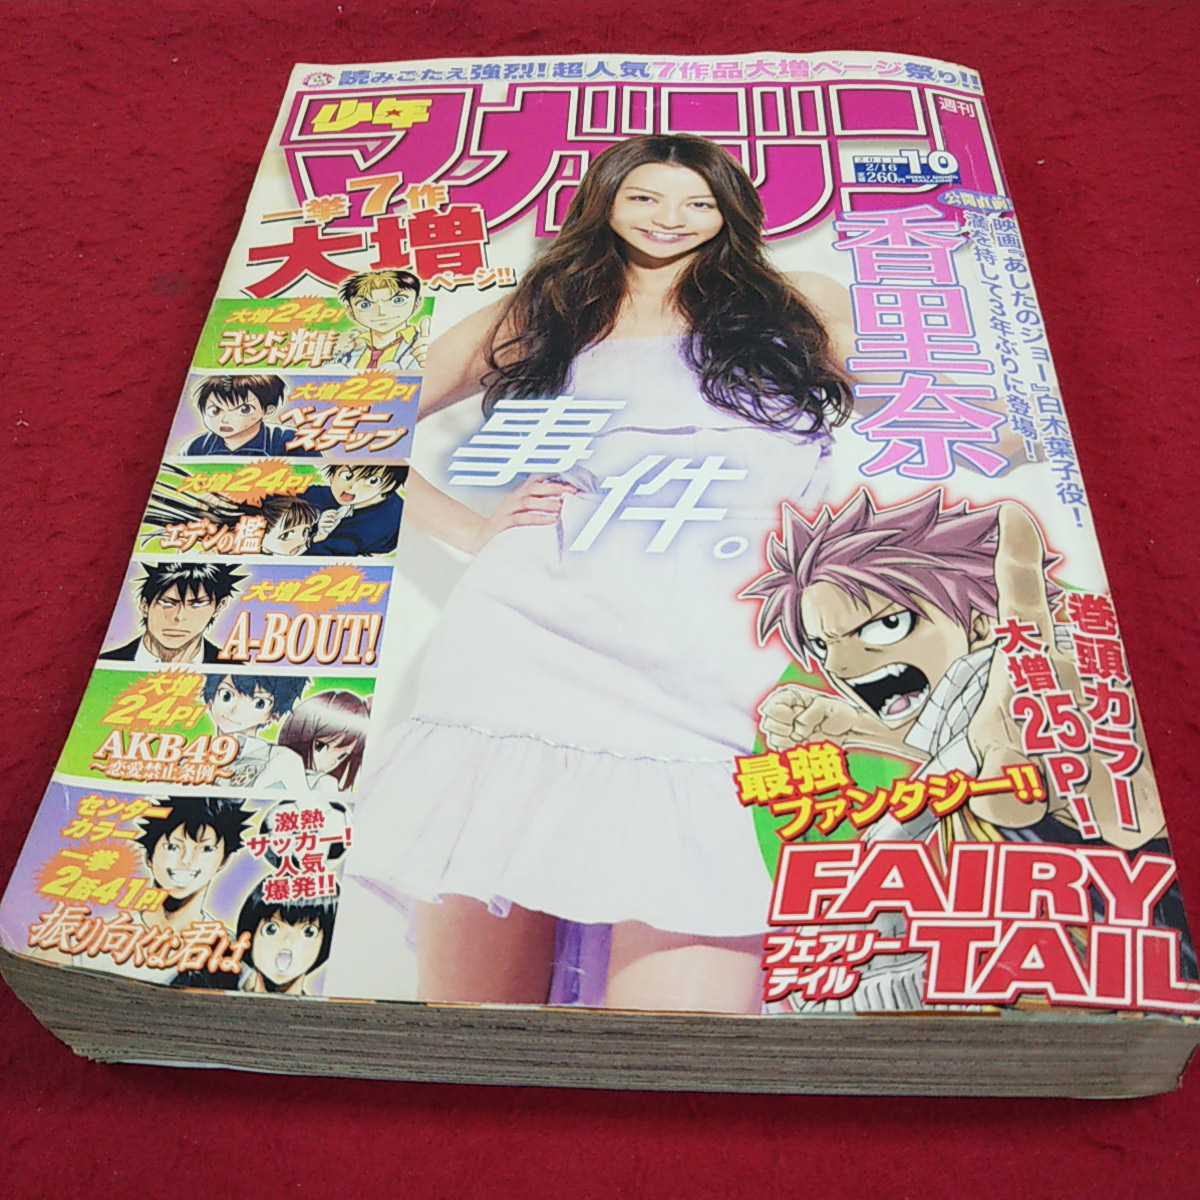 E-111 * 13 Weekly Shonen Magazine 2011 № 10 Kodansha Karina Akb49 Запрет о любви